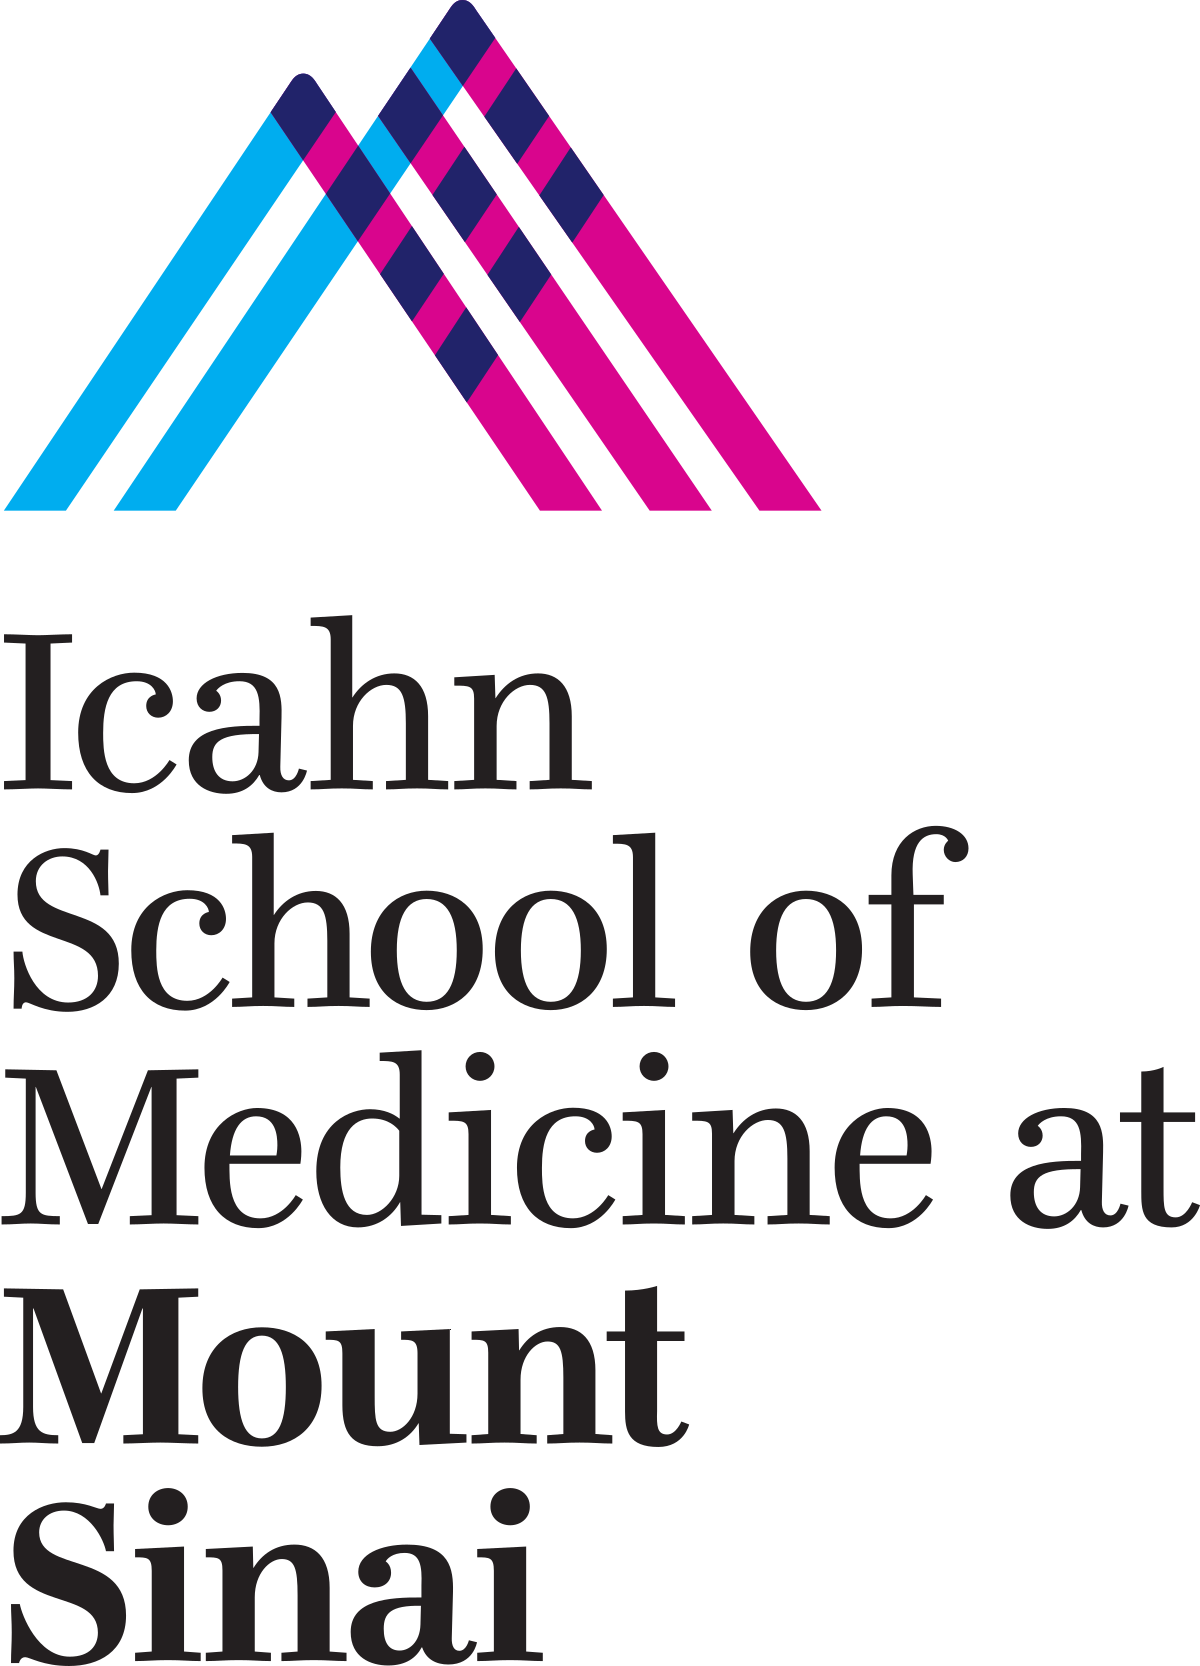 LMSA - Icahn School of Medicine at Mount Sinai